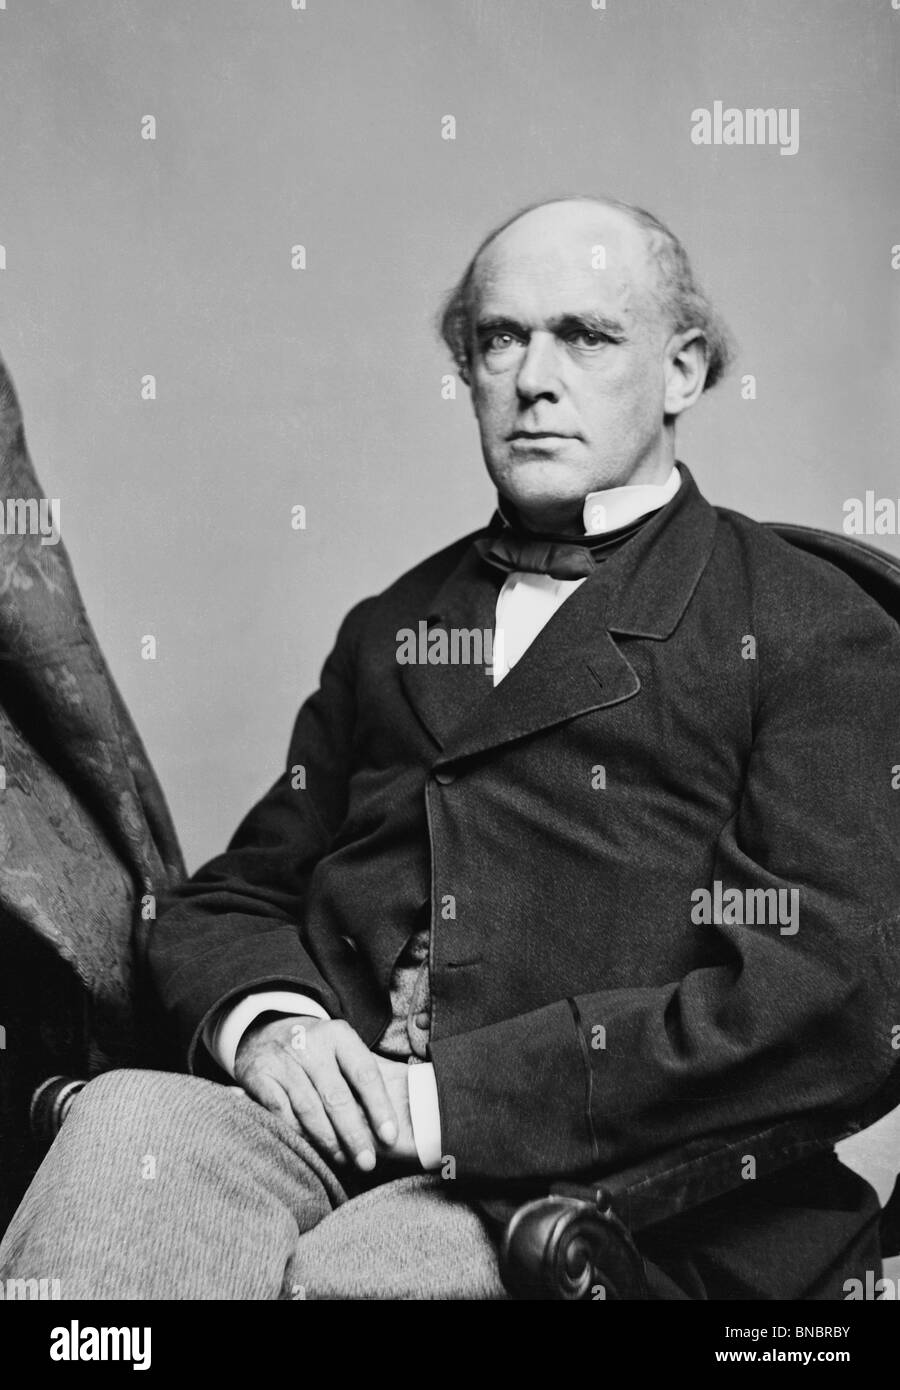 Portrait photo c1860s of Salmon P Chase (1808 - 1873) - US Treasury Secretary (1861 - 1864) and US Chief Justice (1864 - 1873). Stock Photo